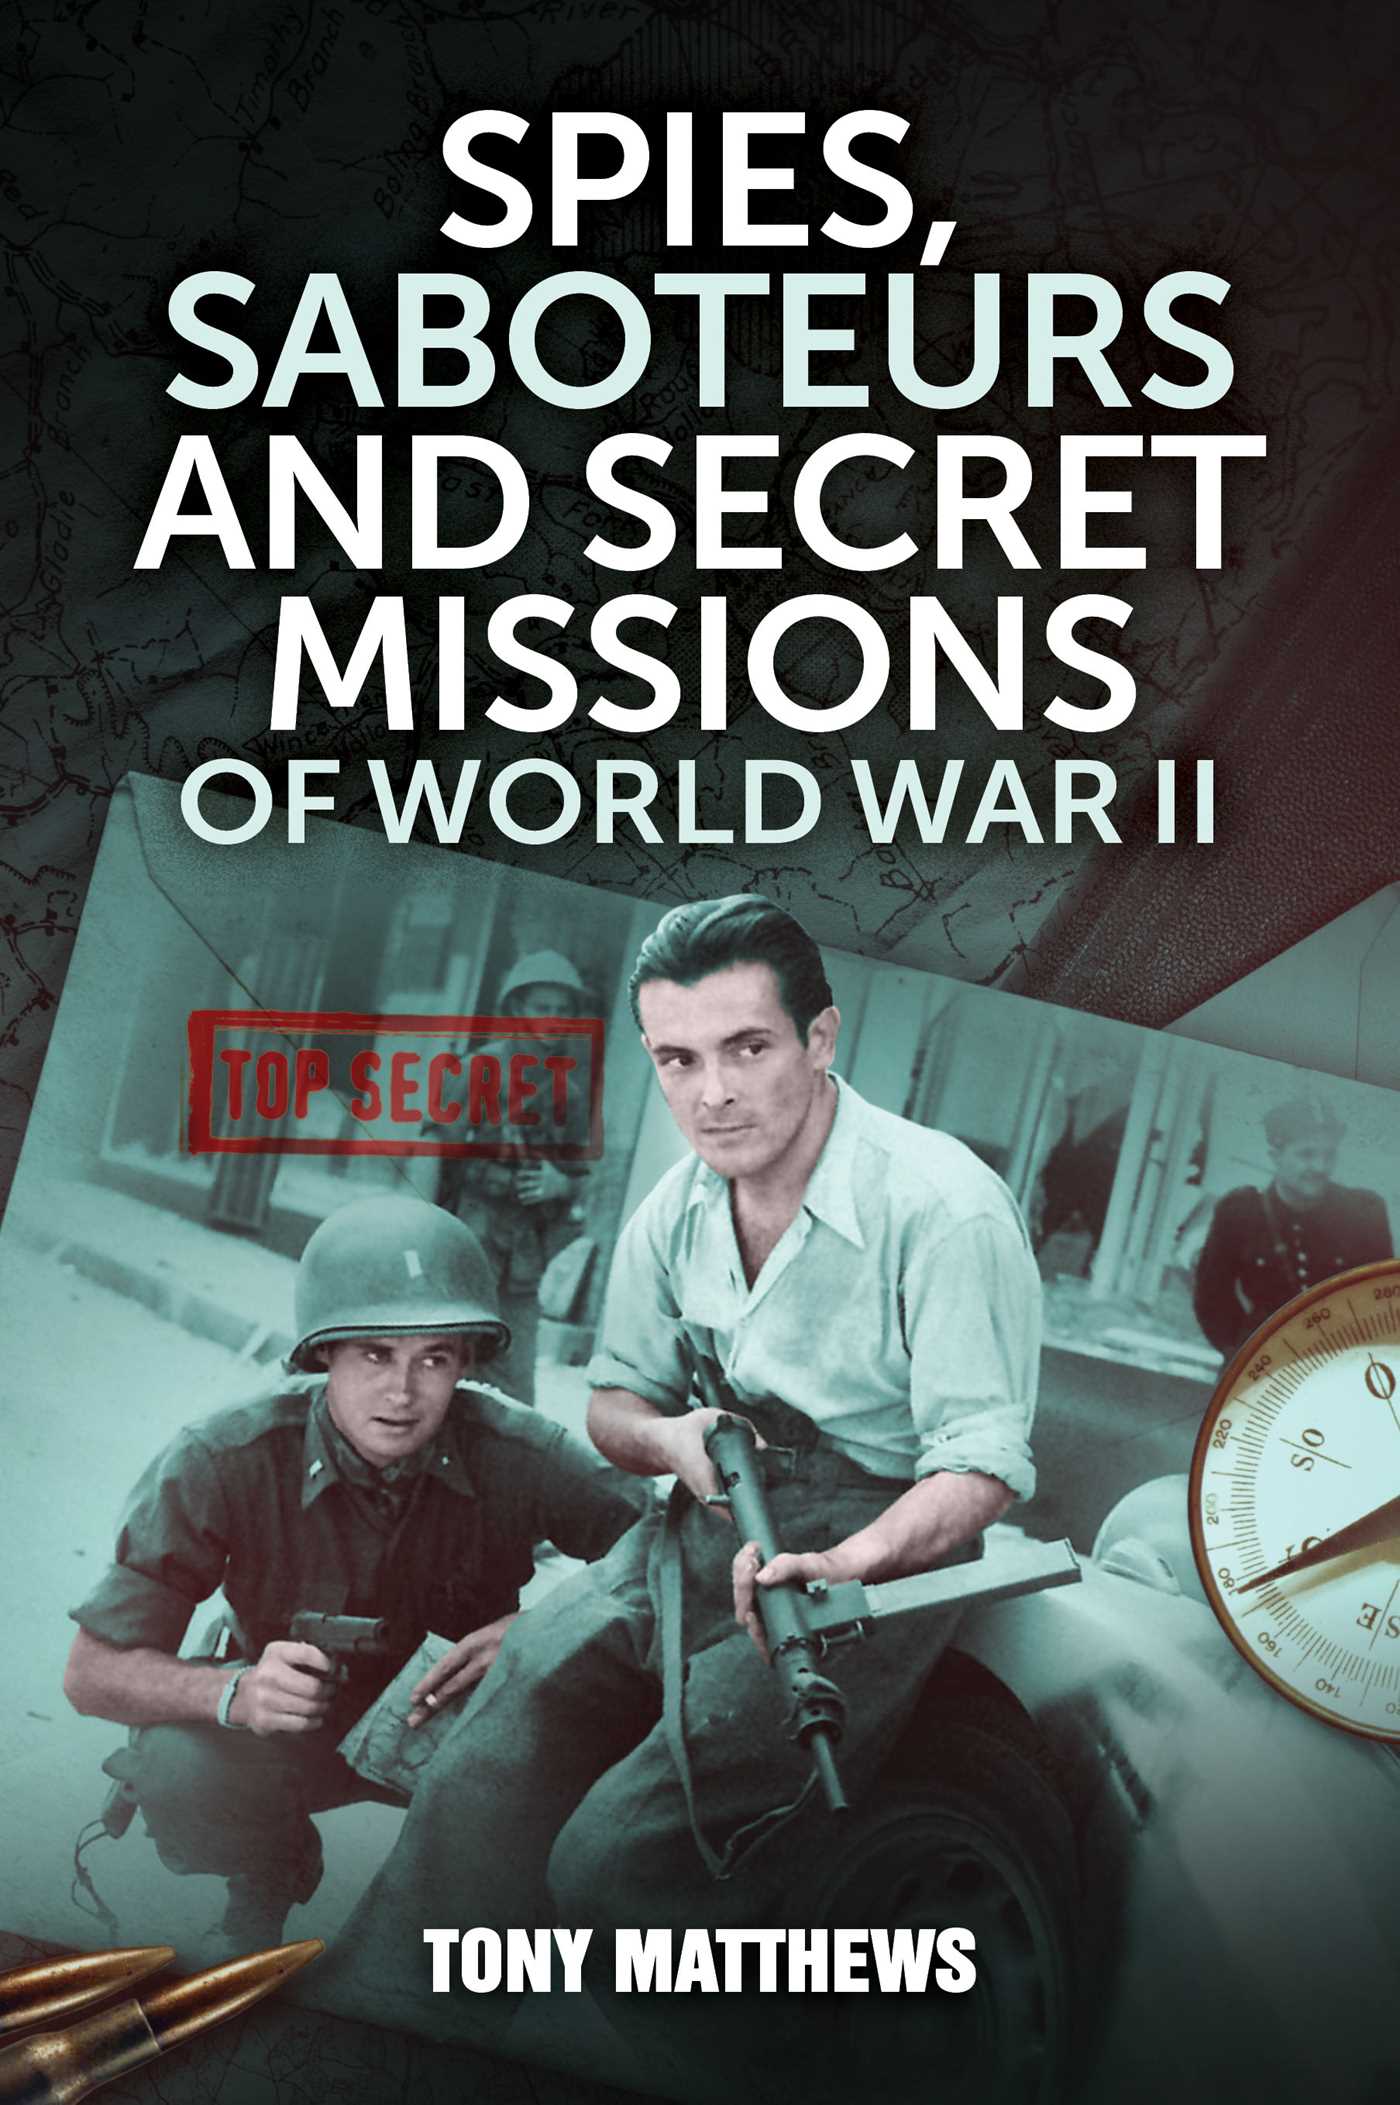 Spies, saboteurs and secret missions of World War II